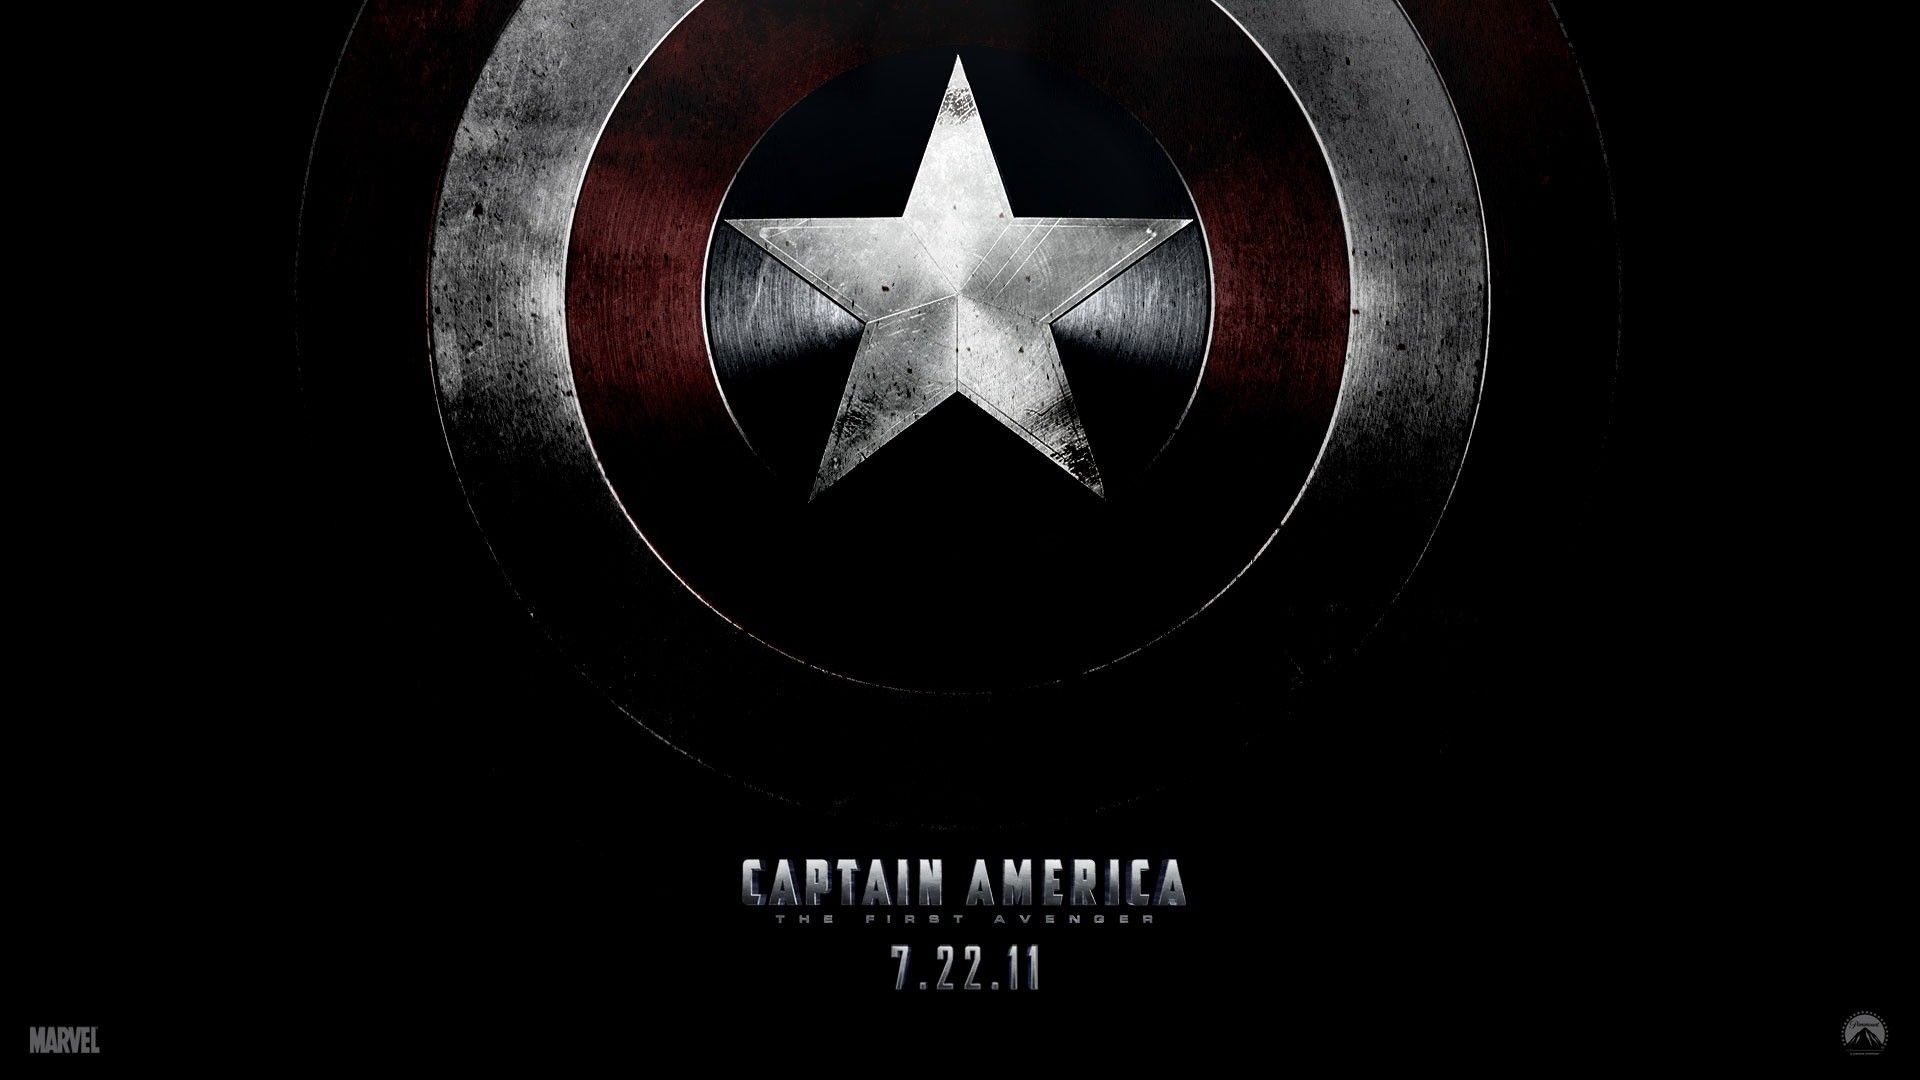 Cool The First Avenger Captain America Movie Wallpaper |